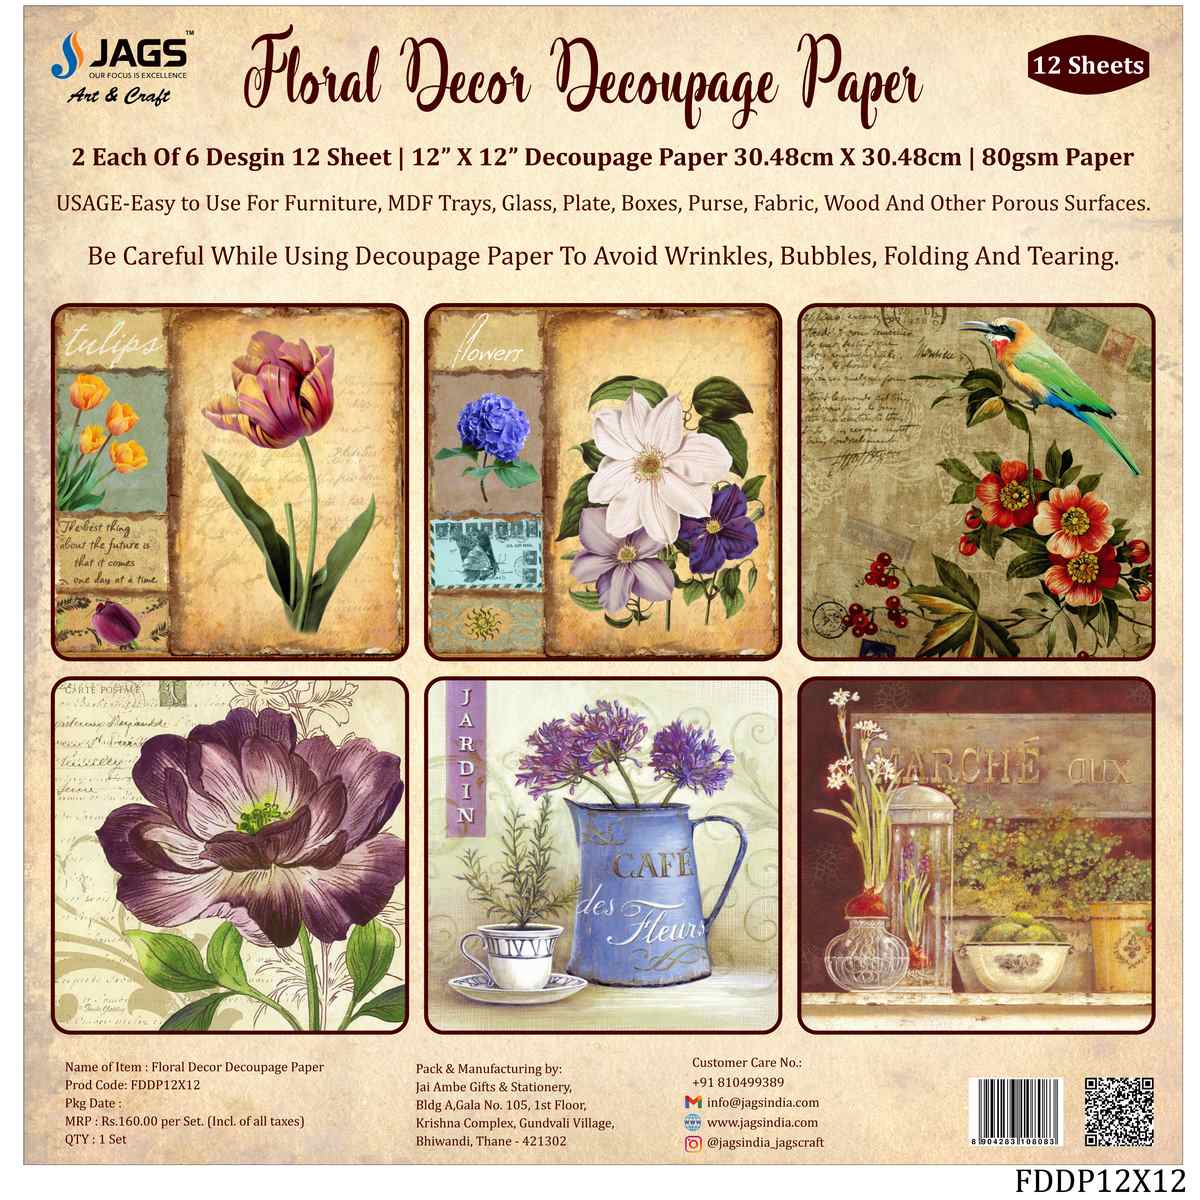 jags-mumbai Decoupage Floral Decor Decoupage Paper 12X12 FDDP12X12